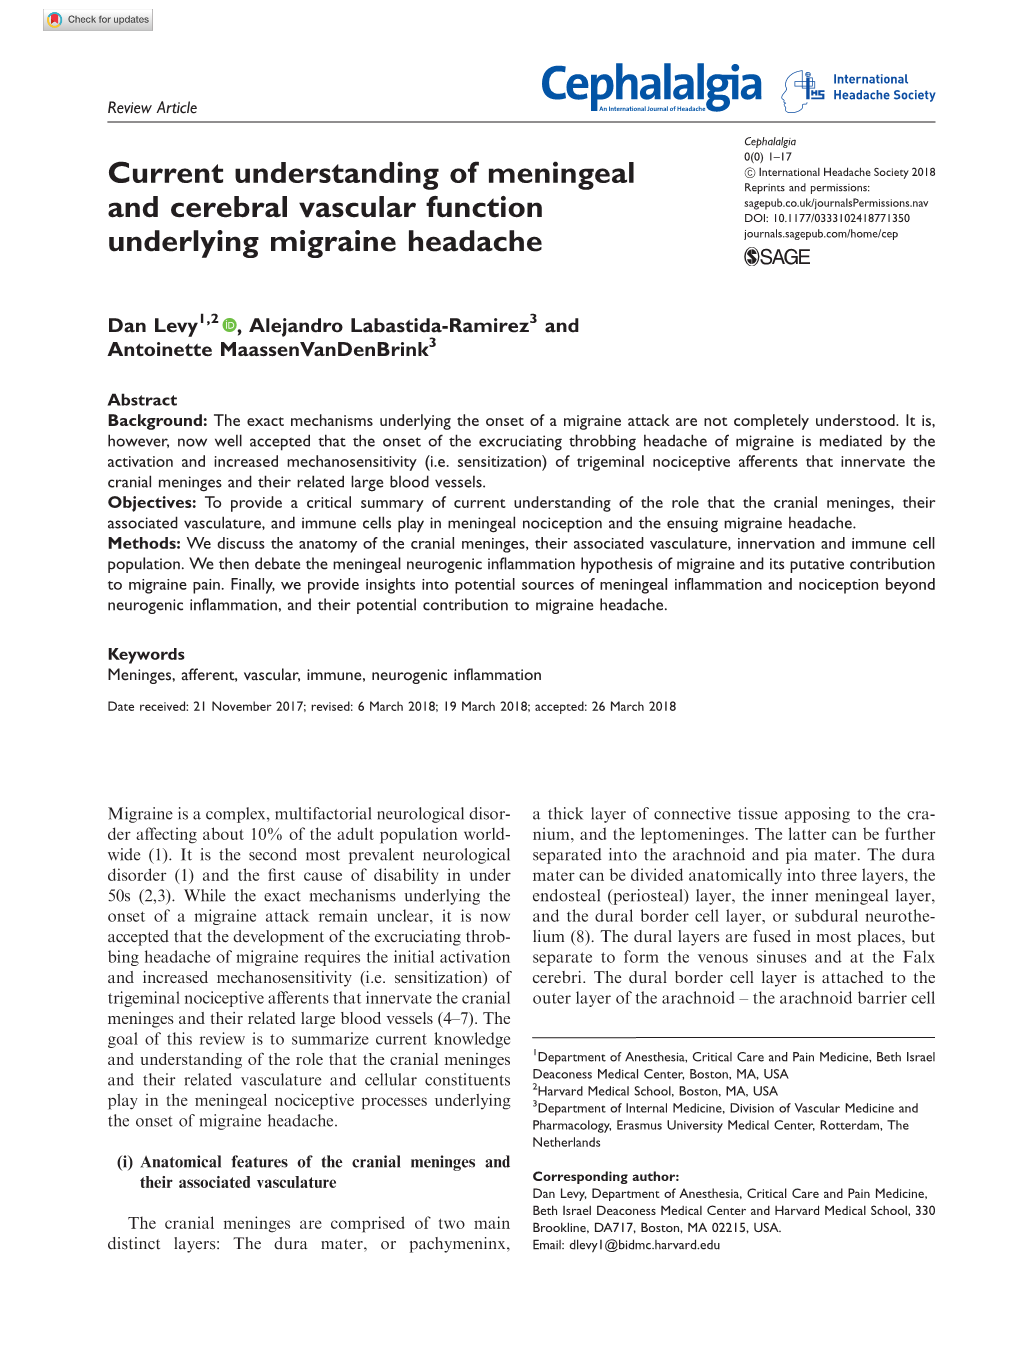 Current Understanding of Meningeal and Cerebral Vascular Function